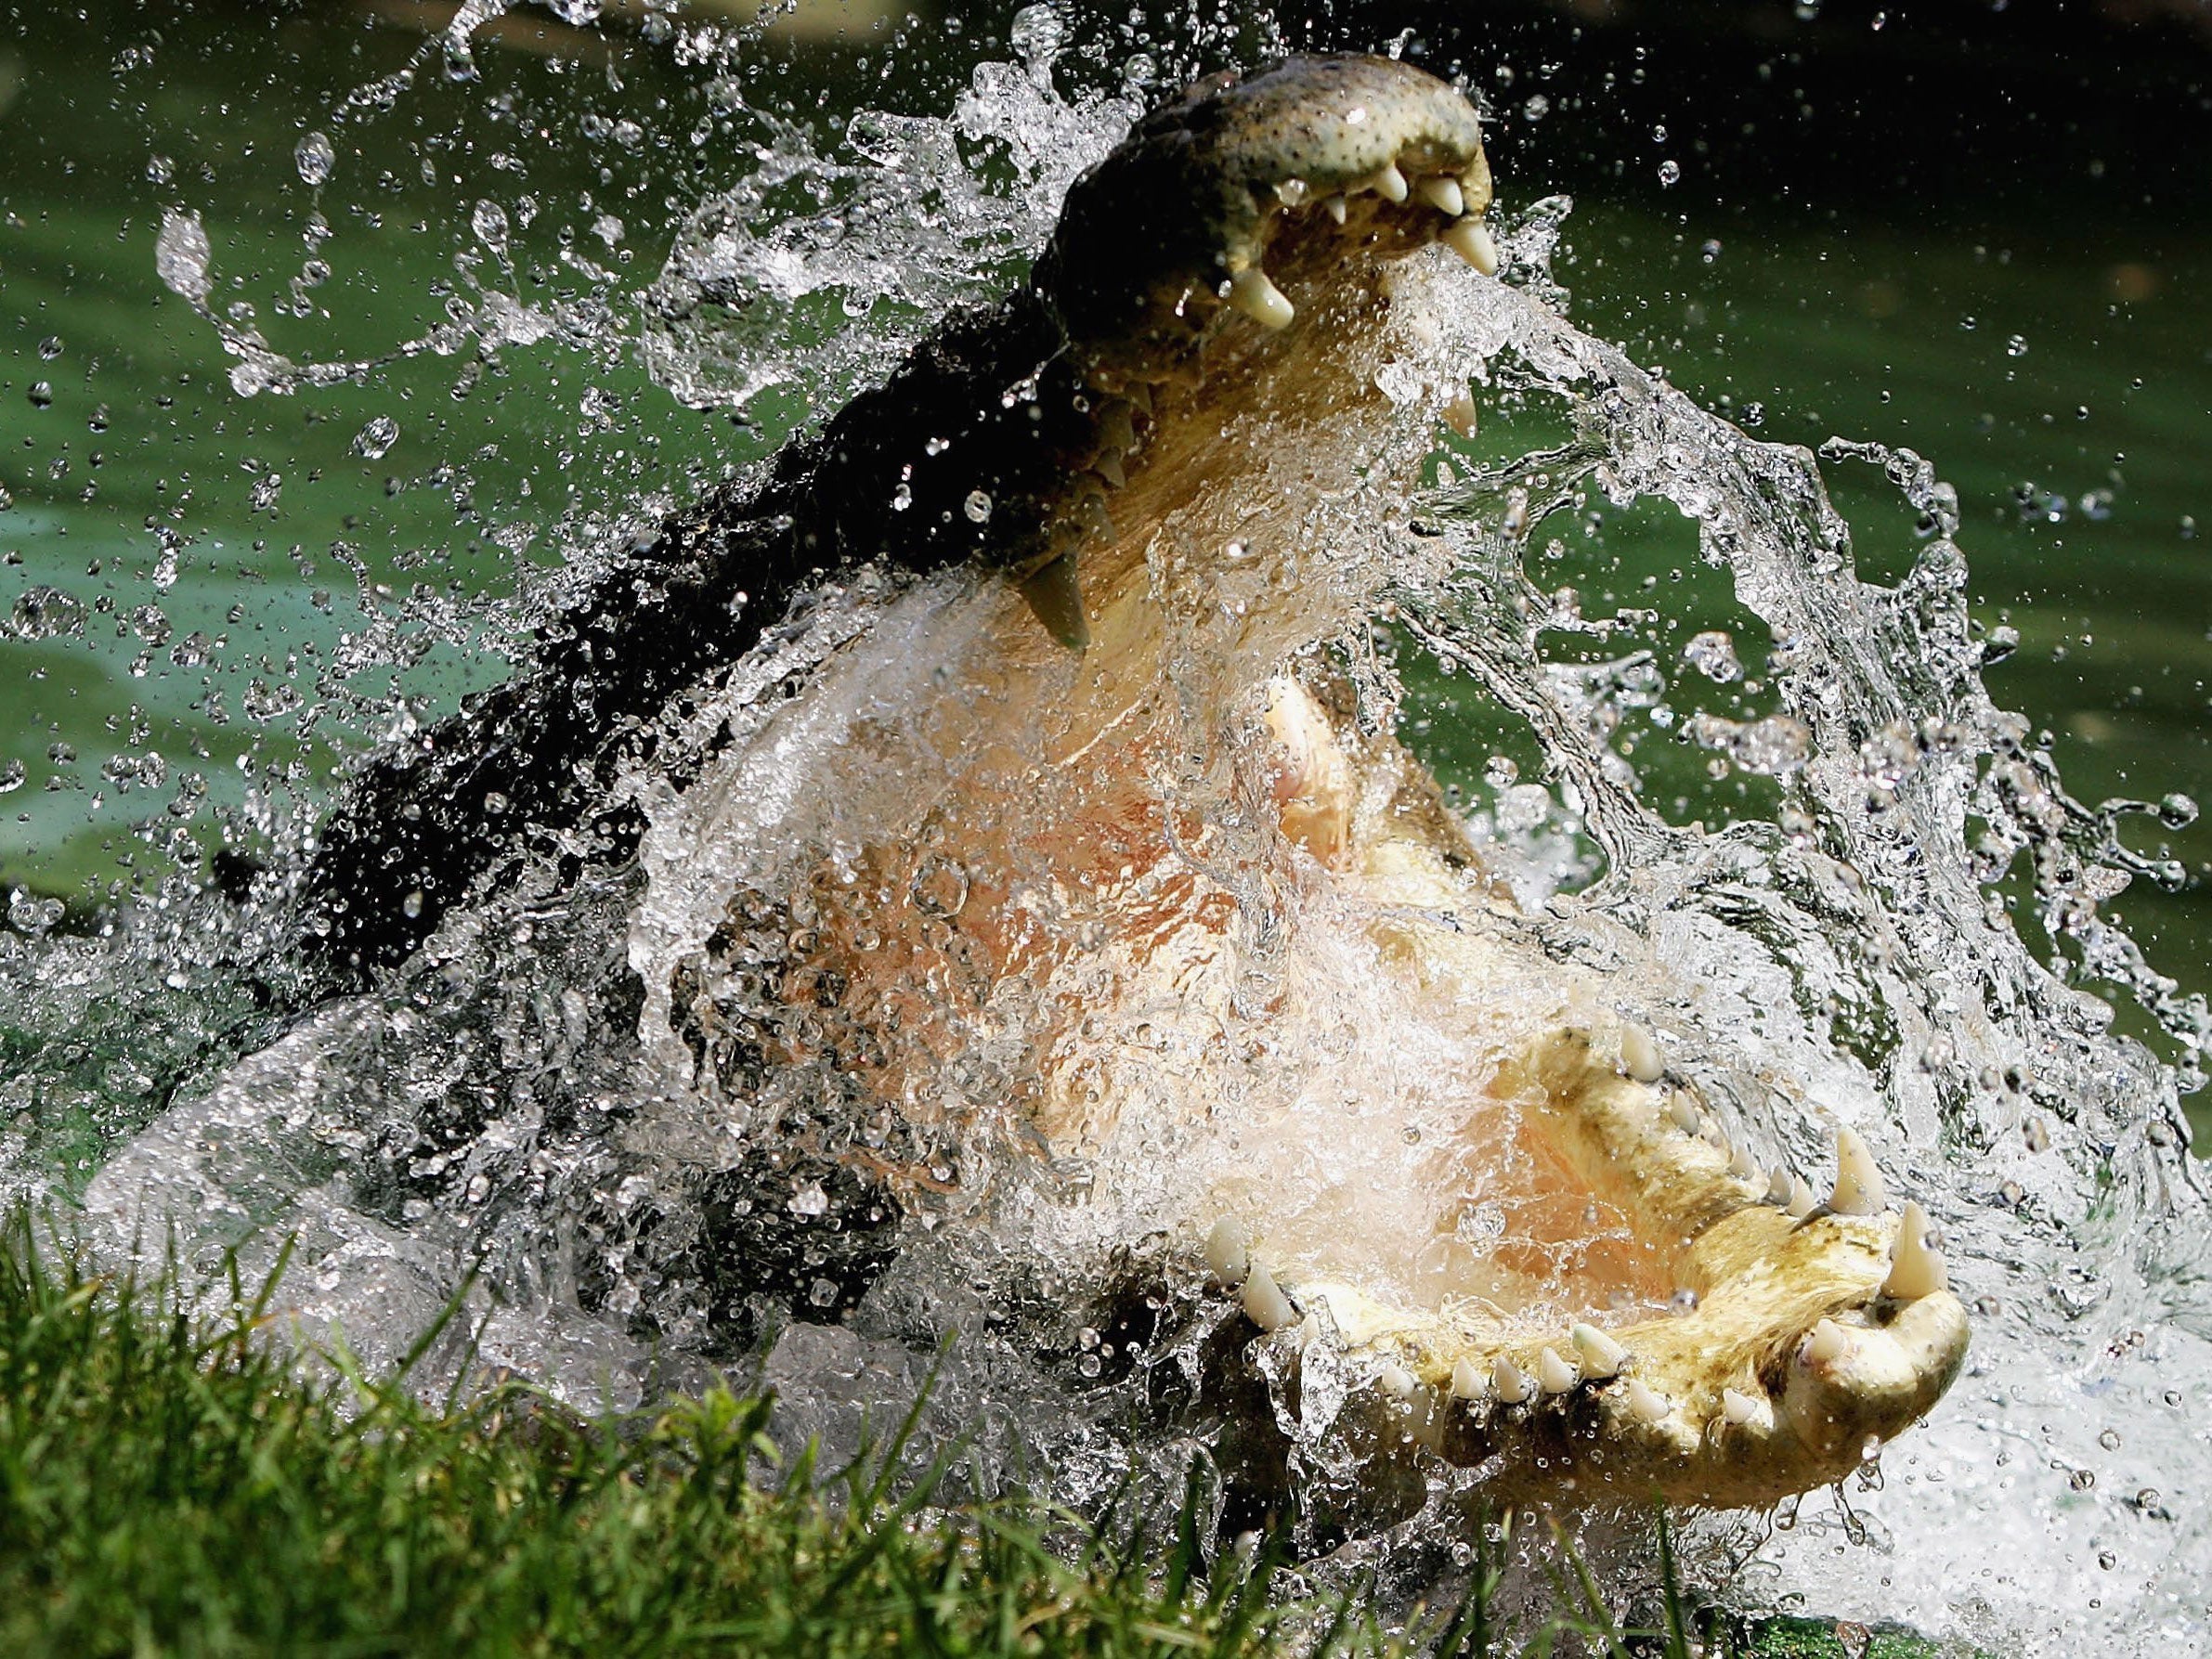 A Saltwater Crocodile pictured in Australia